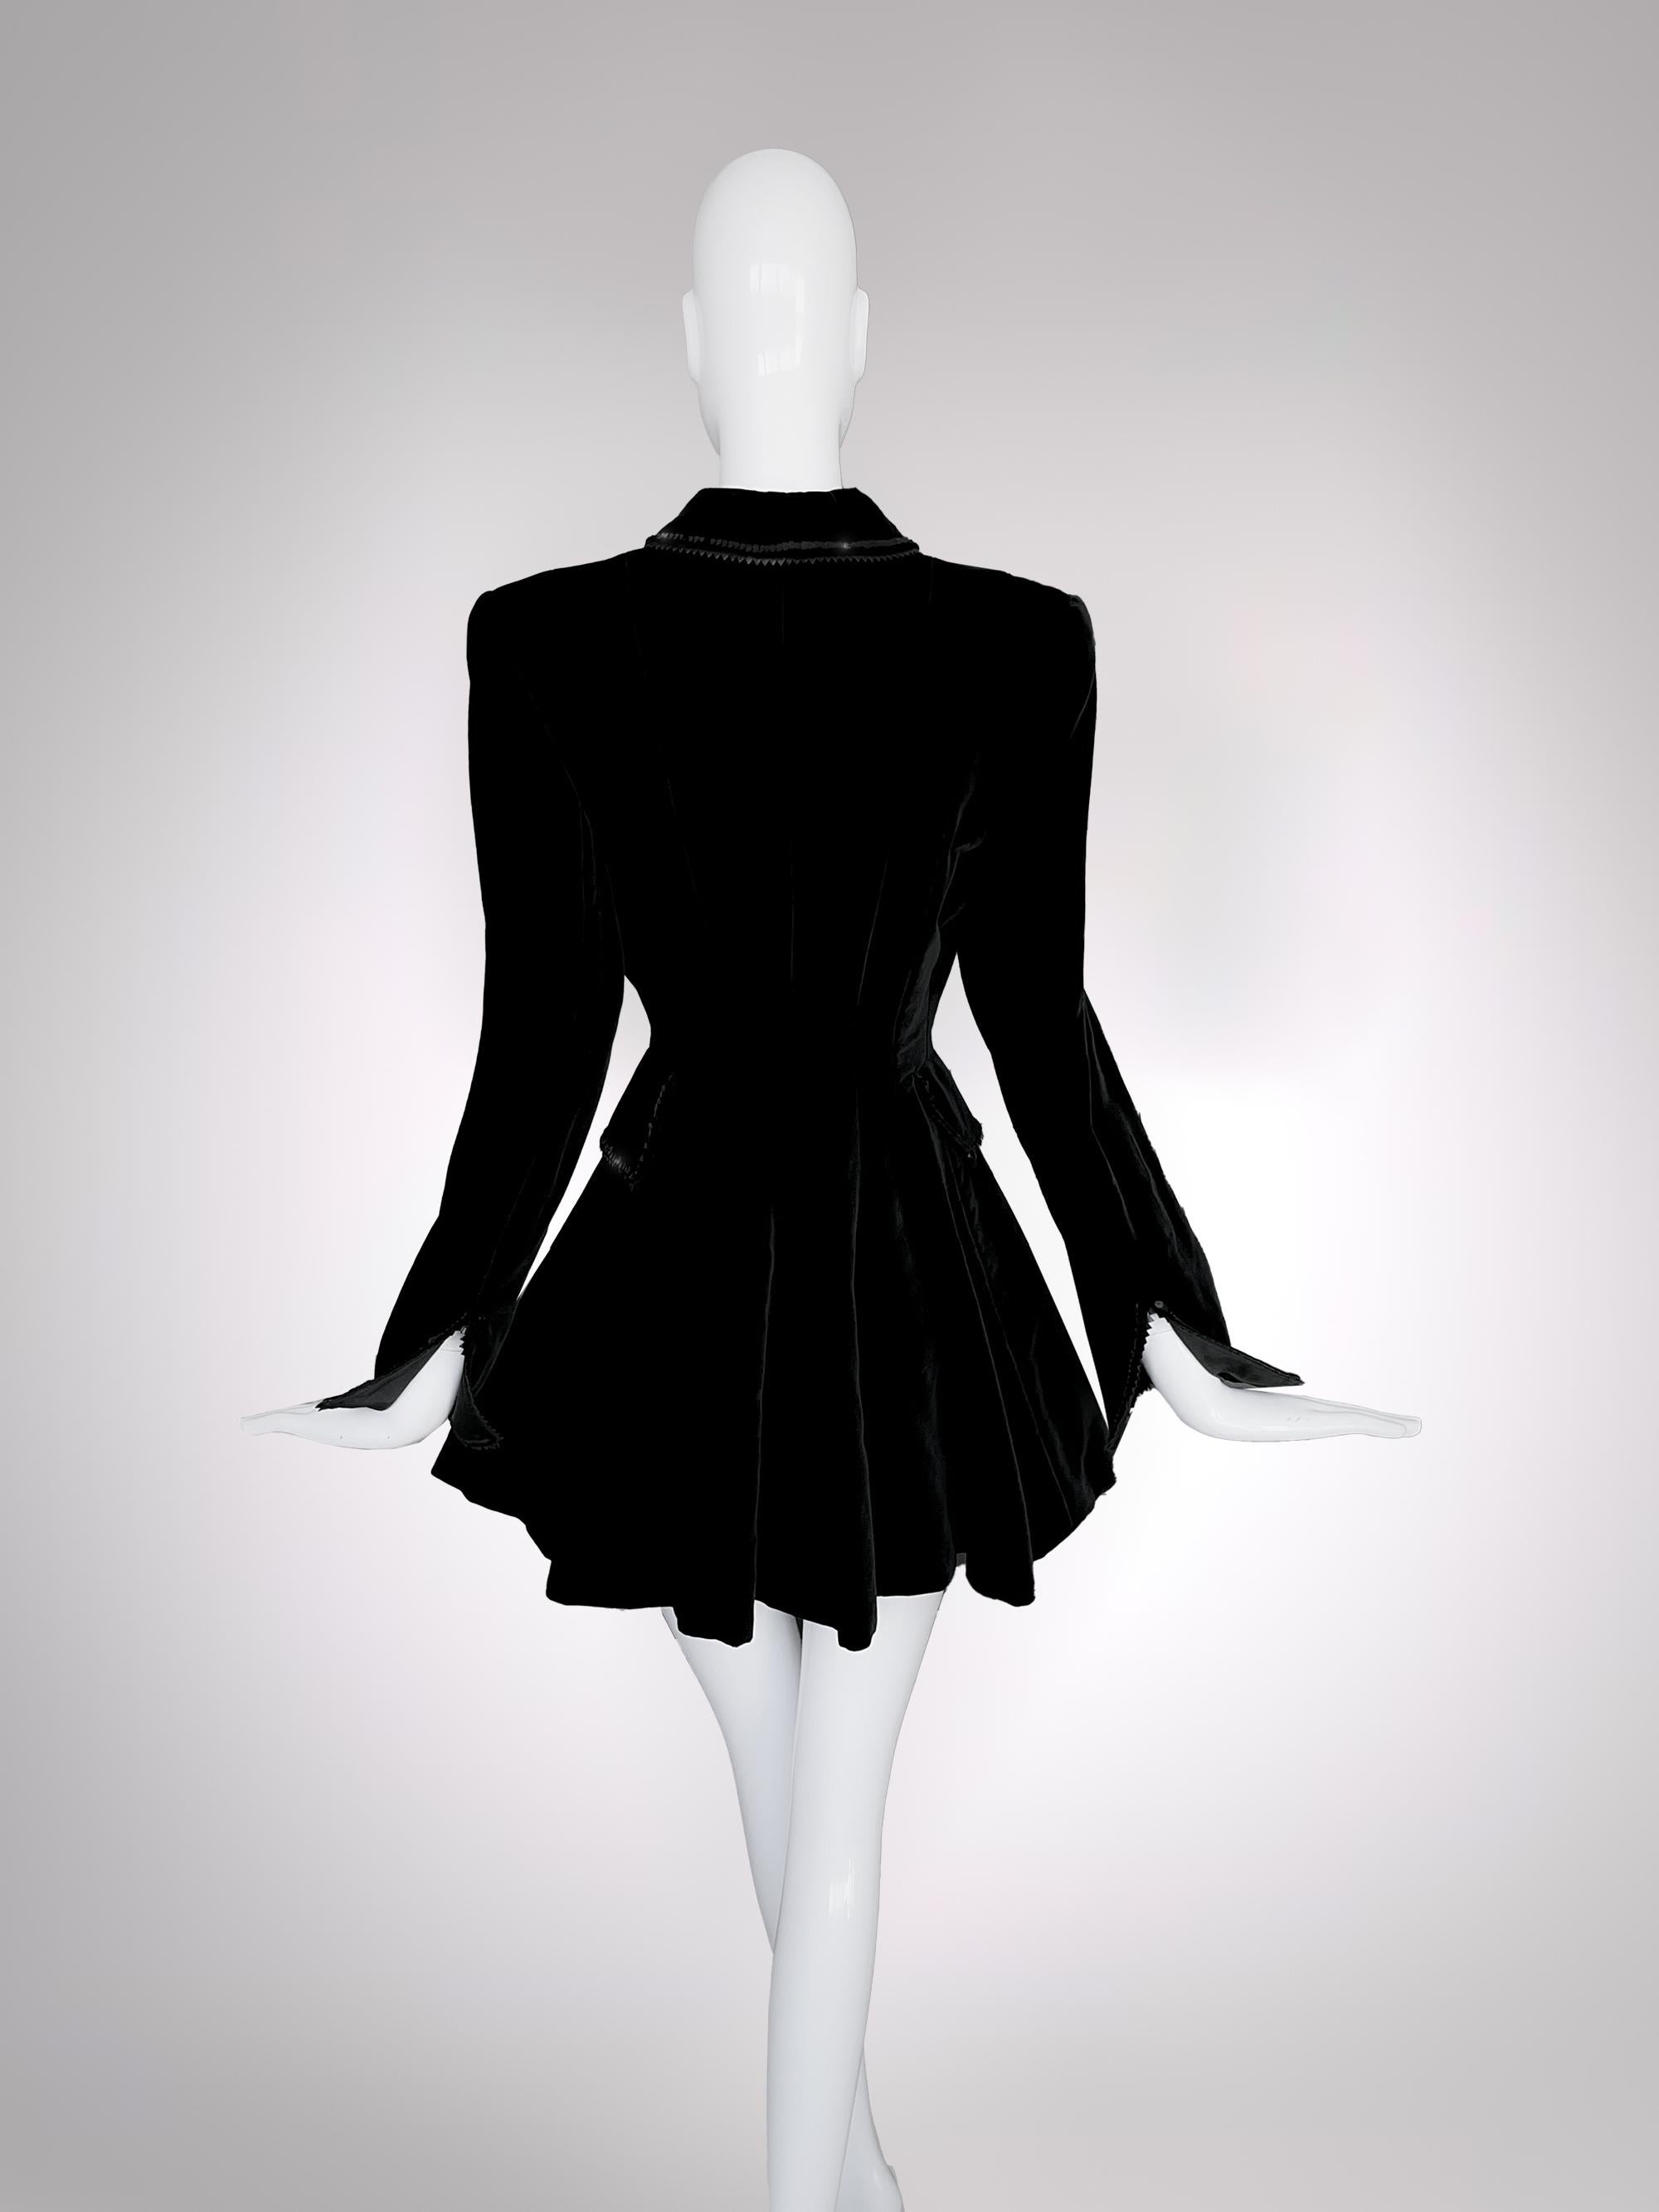 Christian Dior by Gianfranco Ferré FW 1994 Black Velvet Jacket For Sale 6